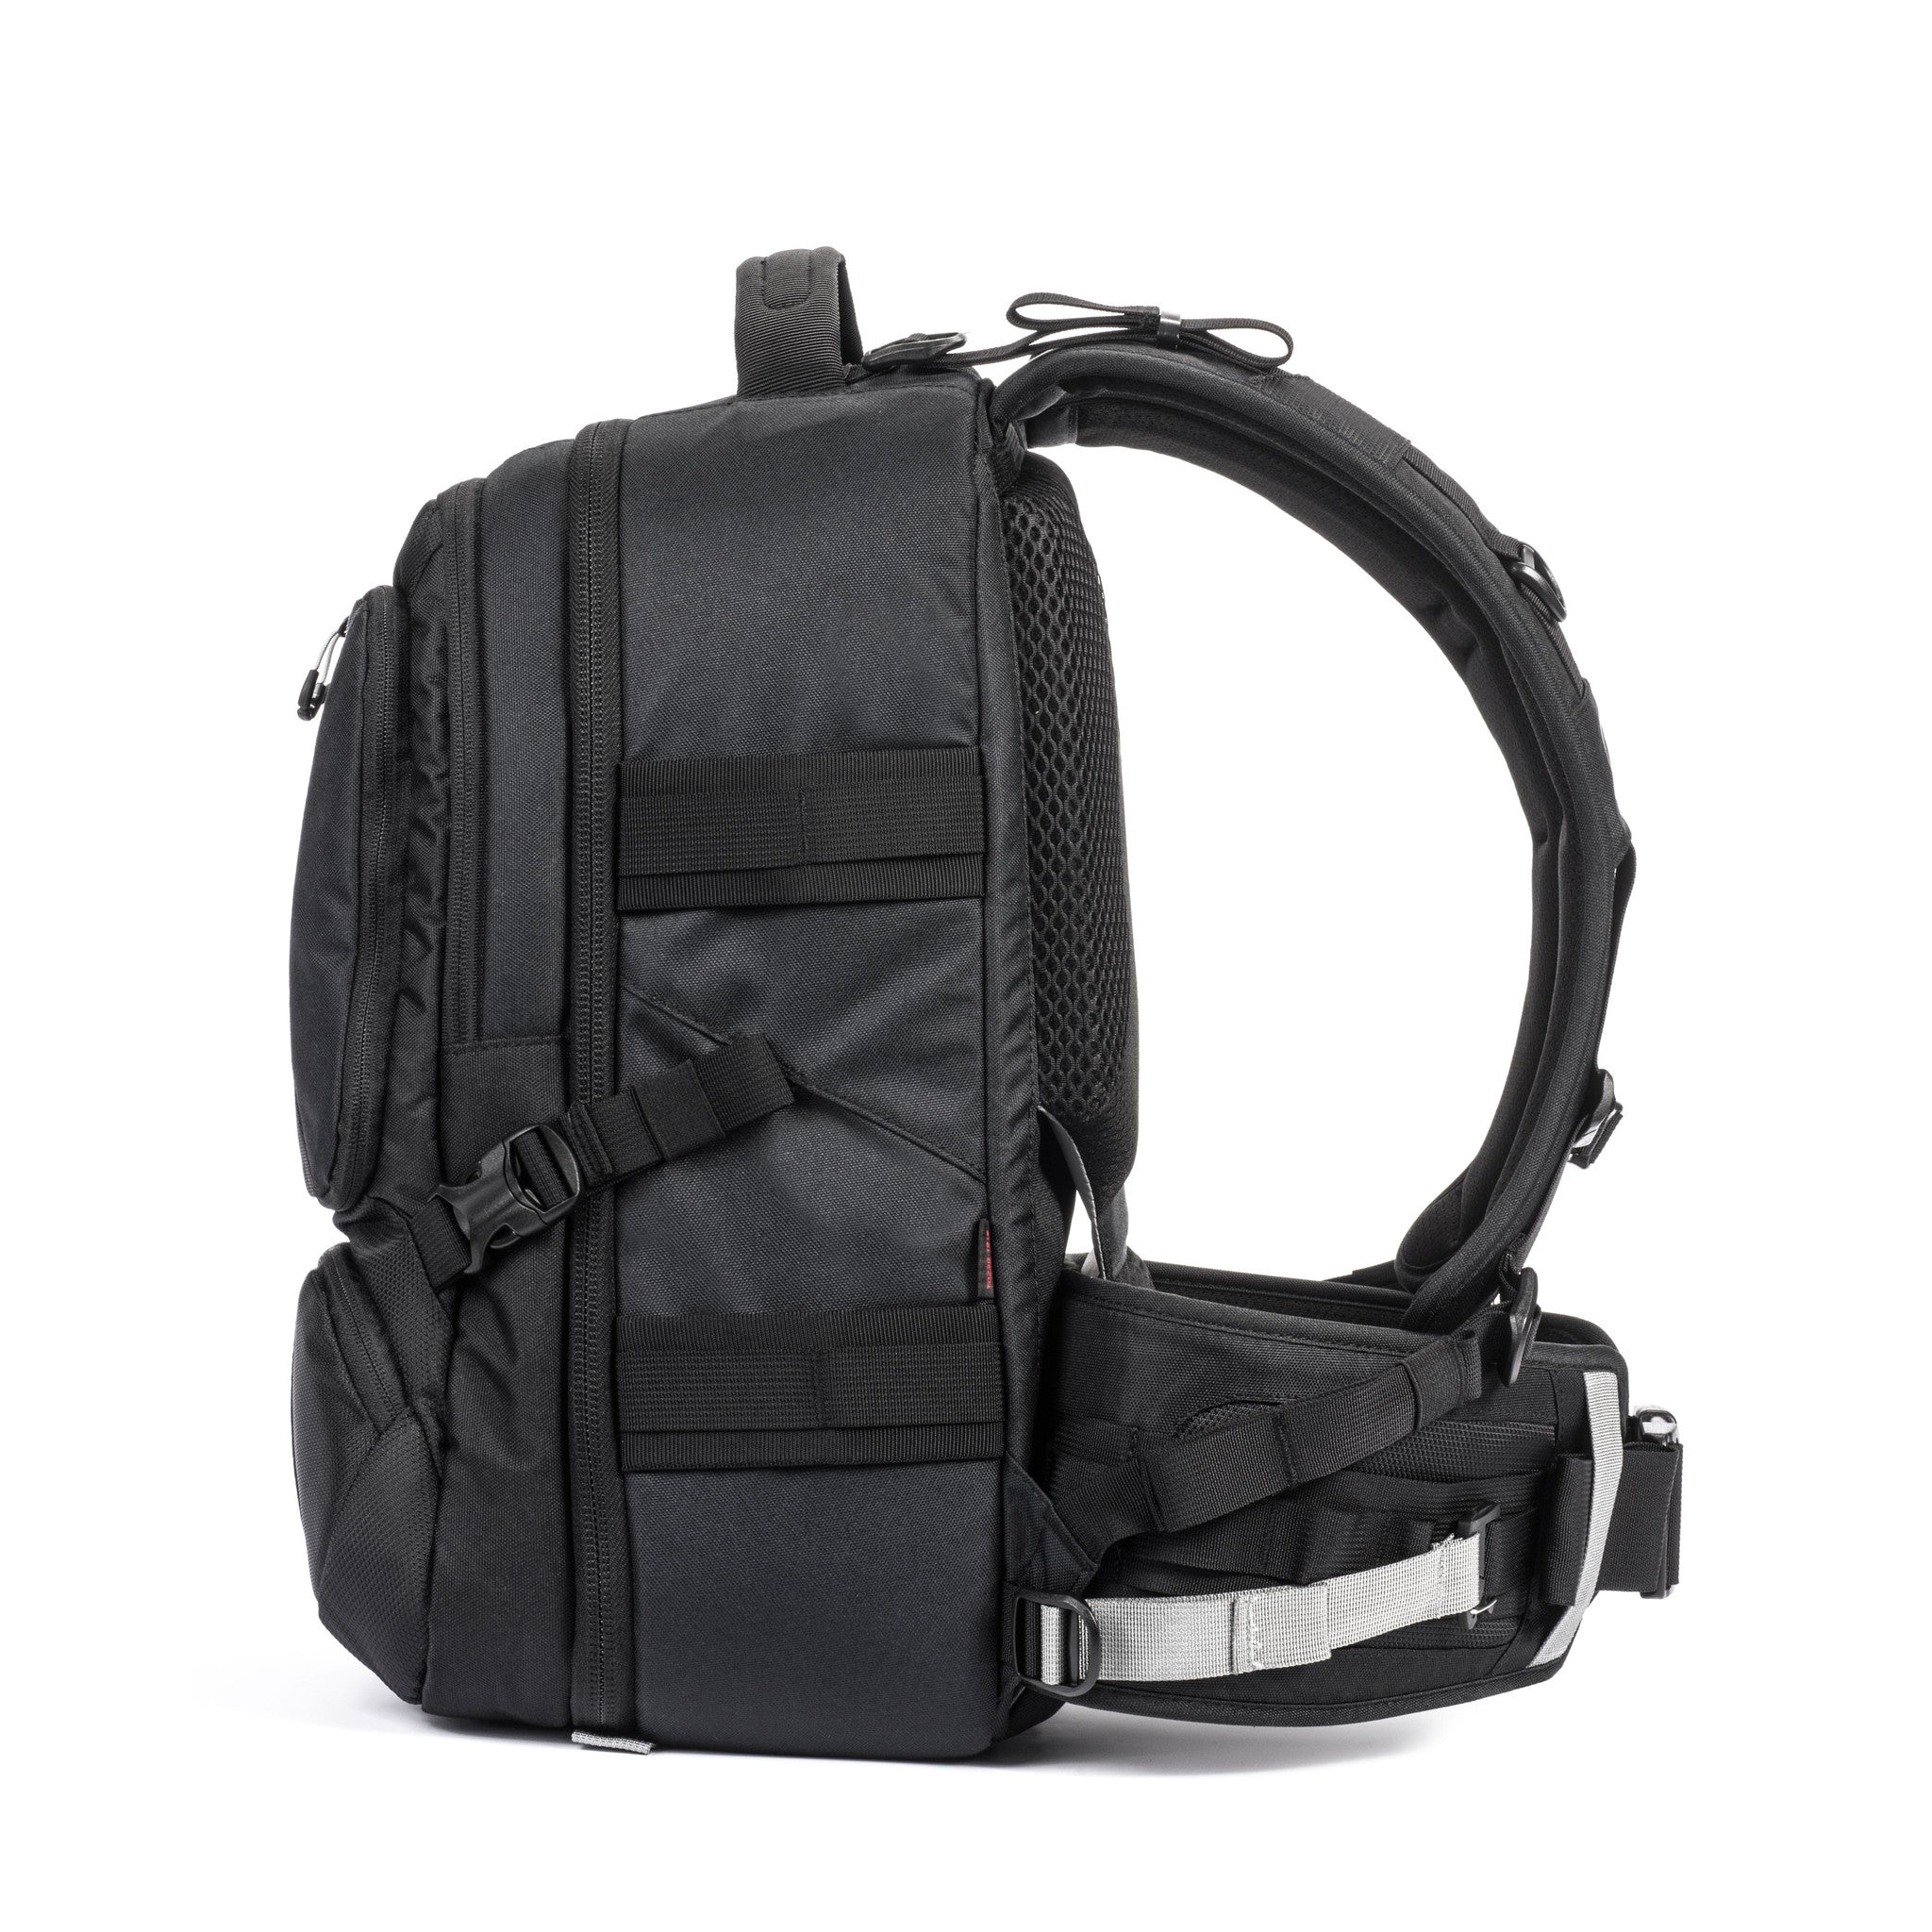 Tamrac Anvil Slim 15 Pro Camera Backpack - Free Shipping